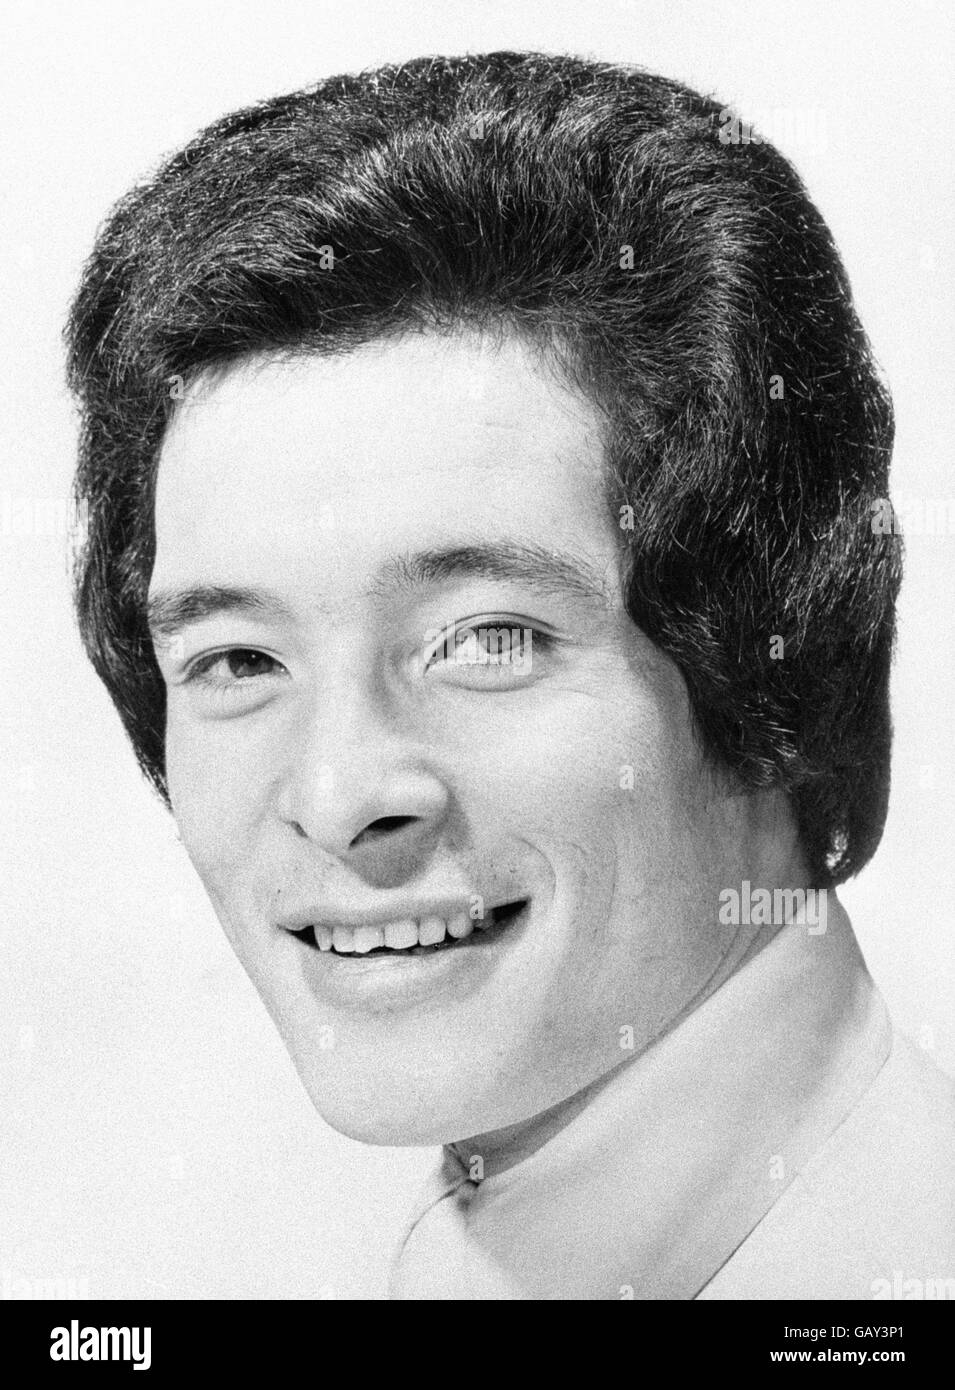 Hairstyles - 1970's Stock Photo